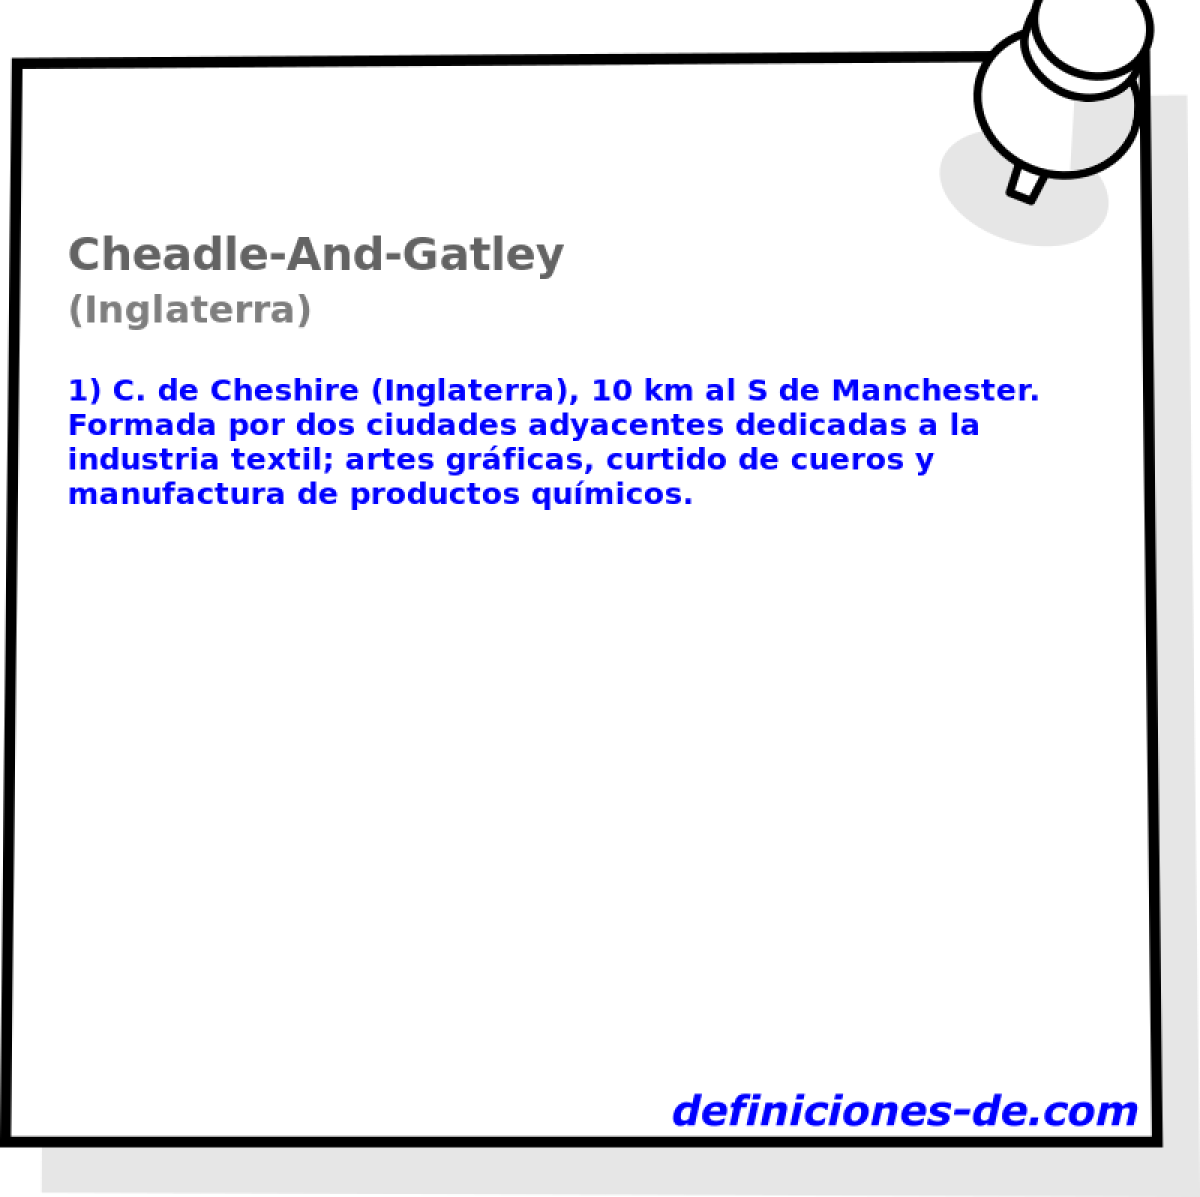 Cheadle-And-Gatley (Inglaterra)